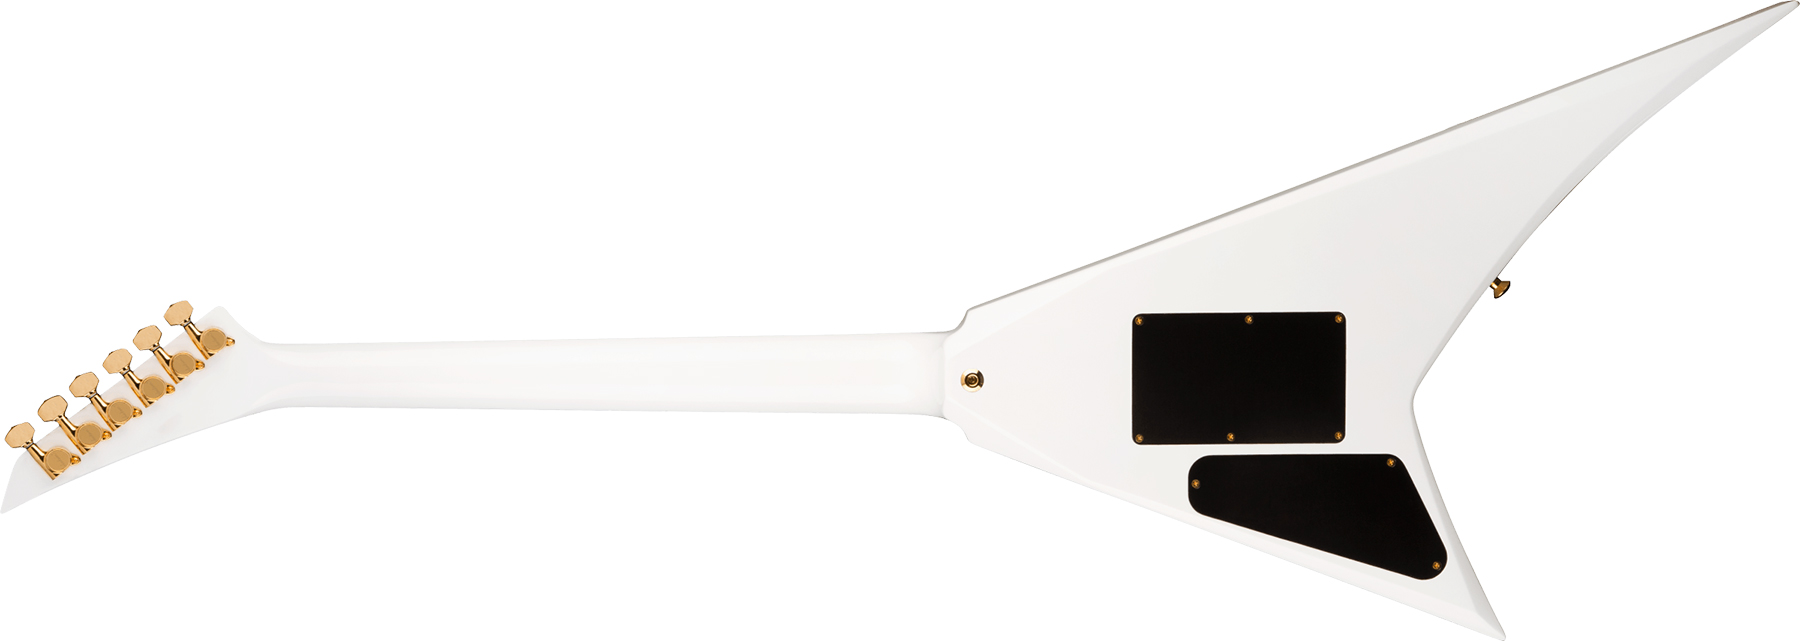 Jackson Rhoads Rr24 Hs Concept Hst Seymour Duncan Fr Eb - White With Black Pinstripes - Metal electric guitar - Variation 1